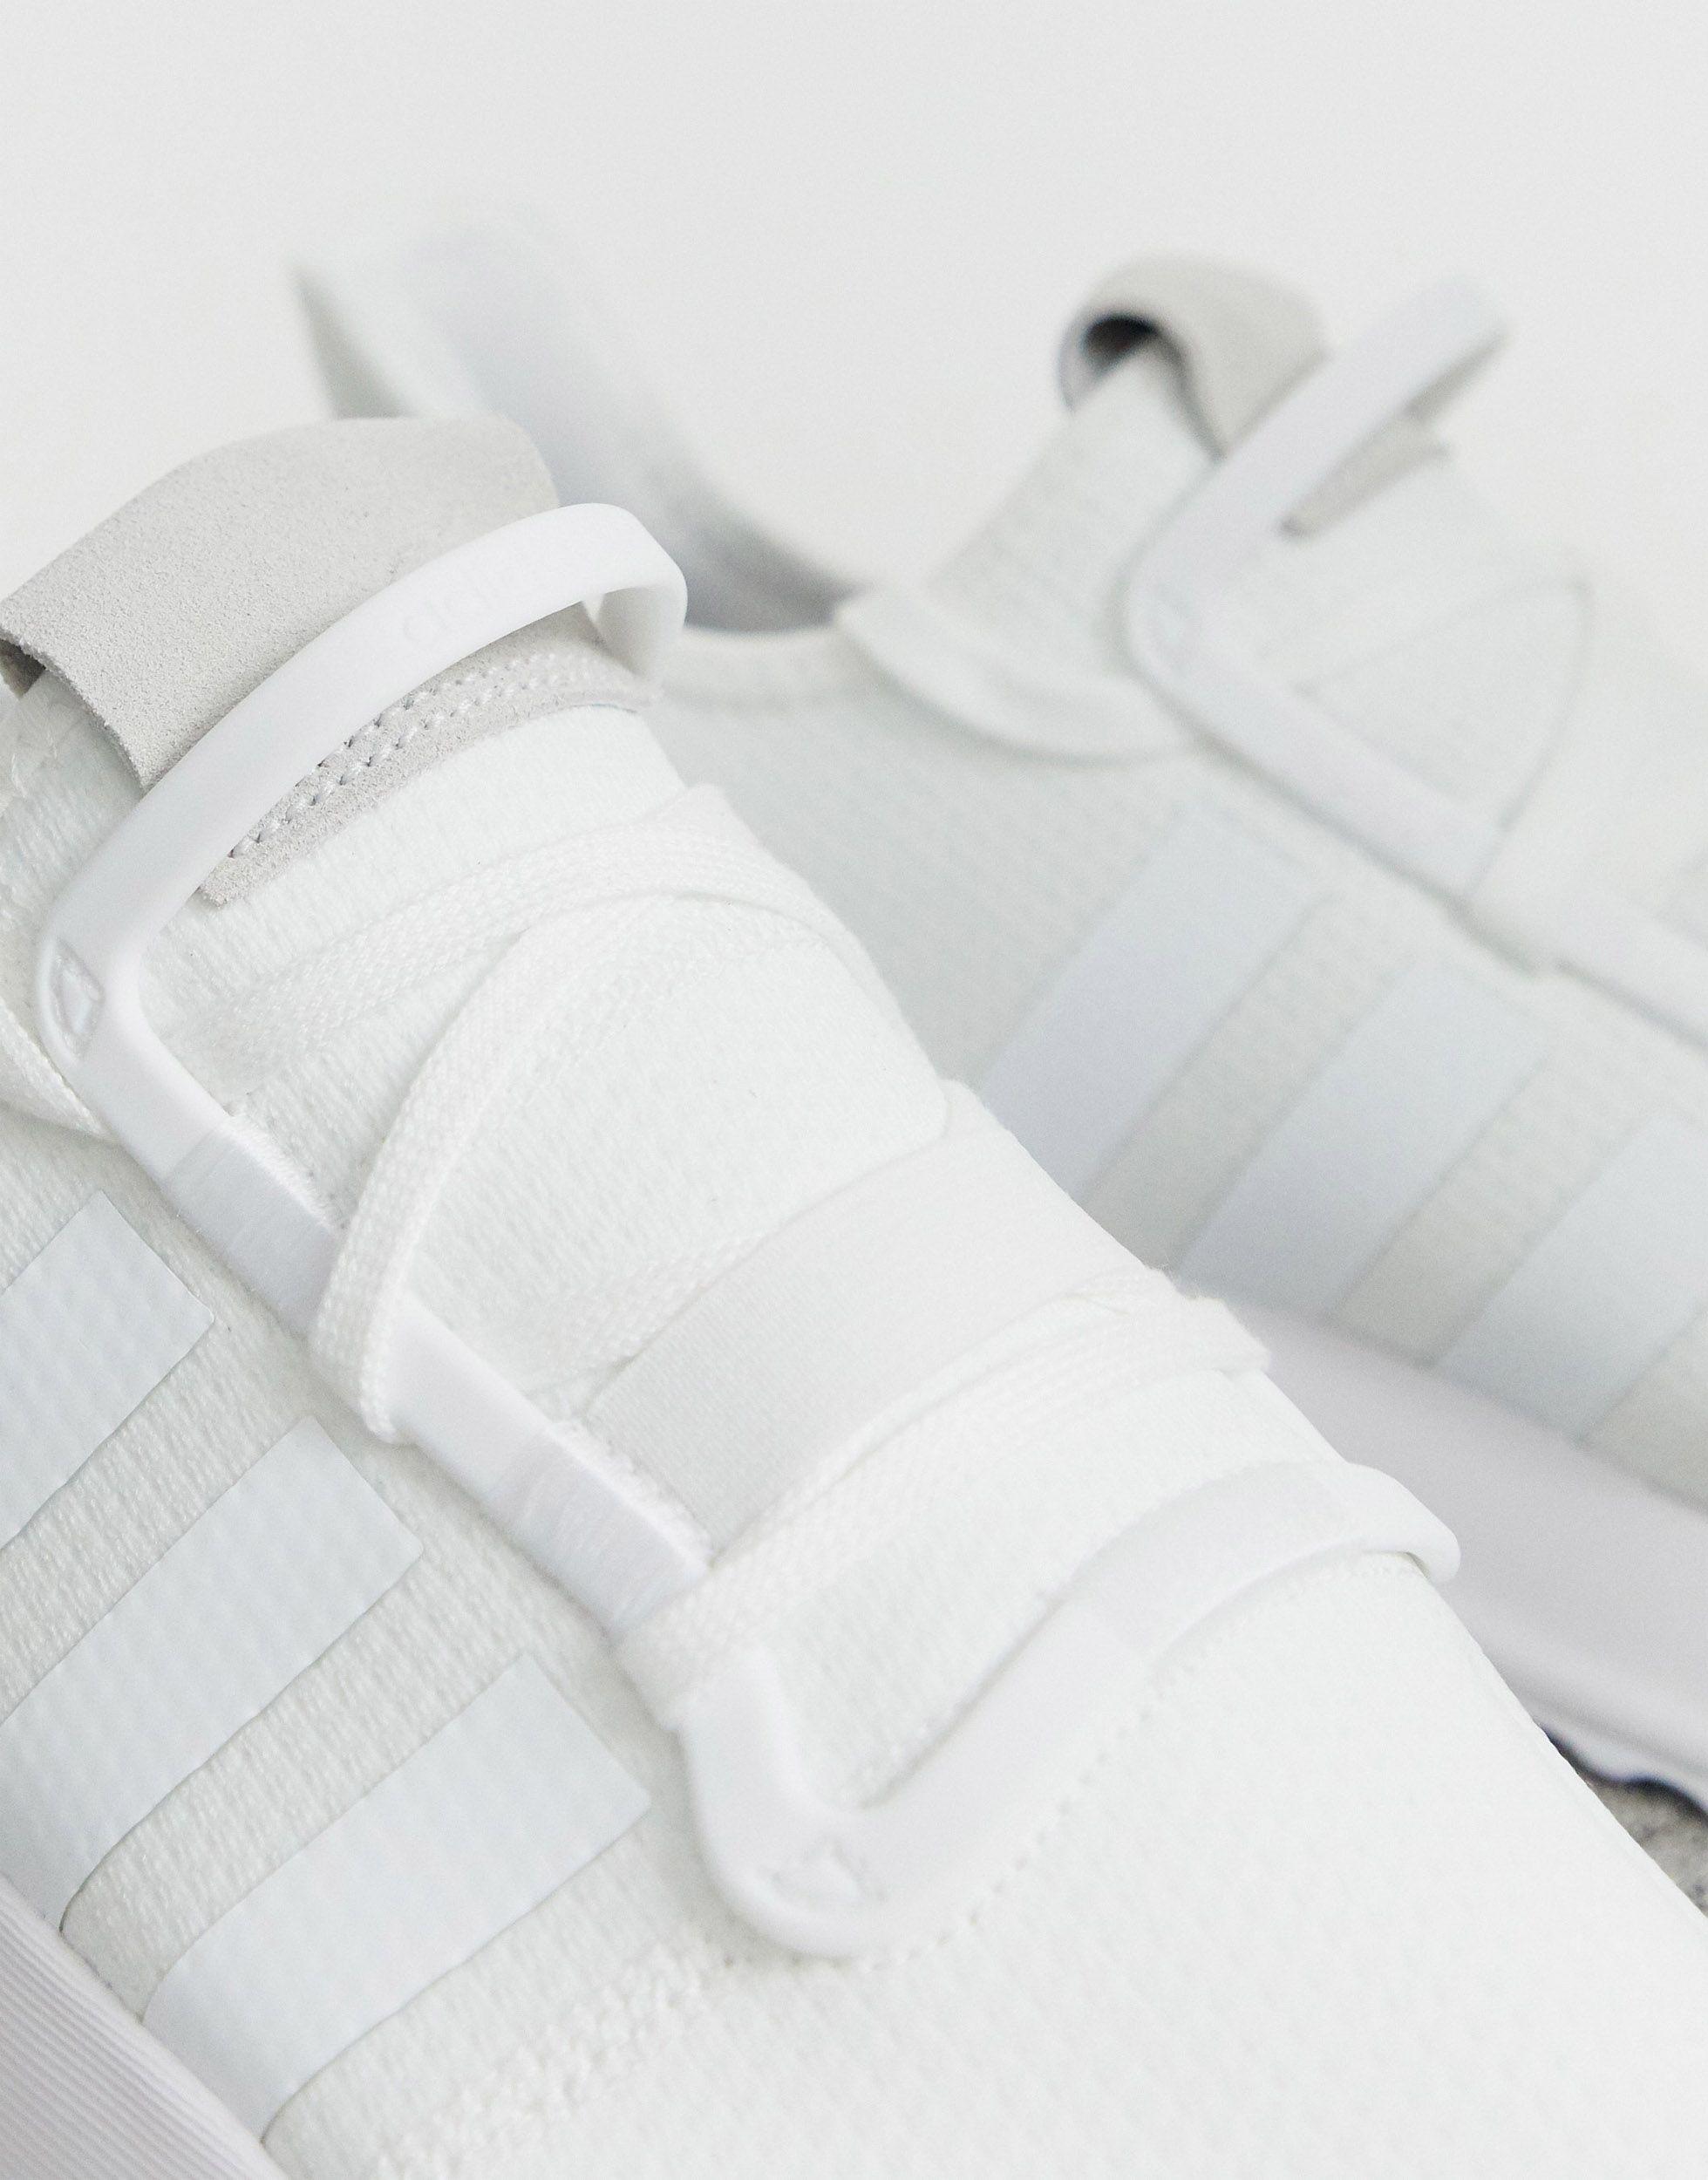 adidas Originals Rubber U_path Run - Shoes in White/White/Black (White) for  Men | Lyst